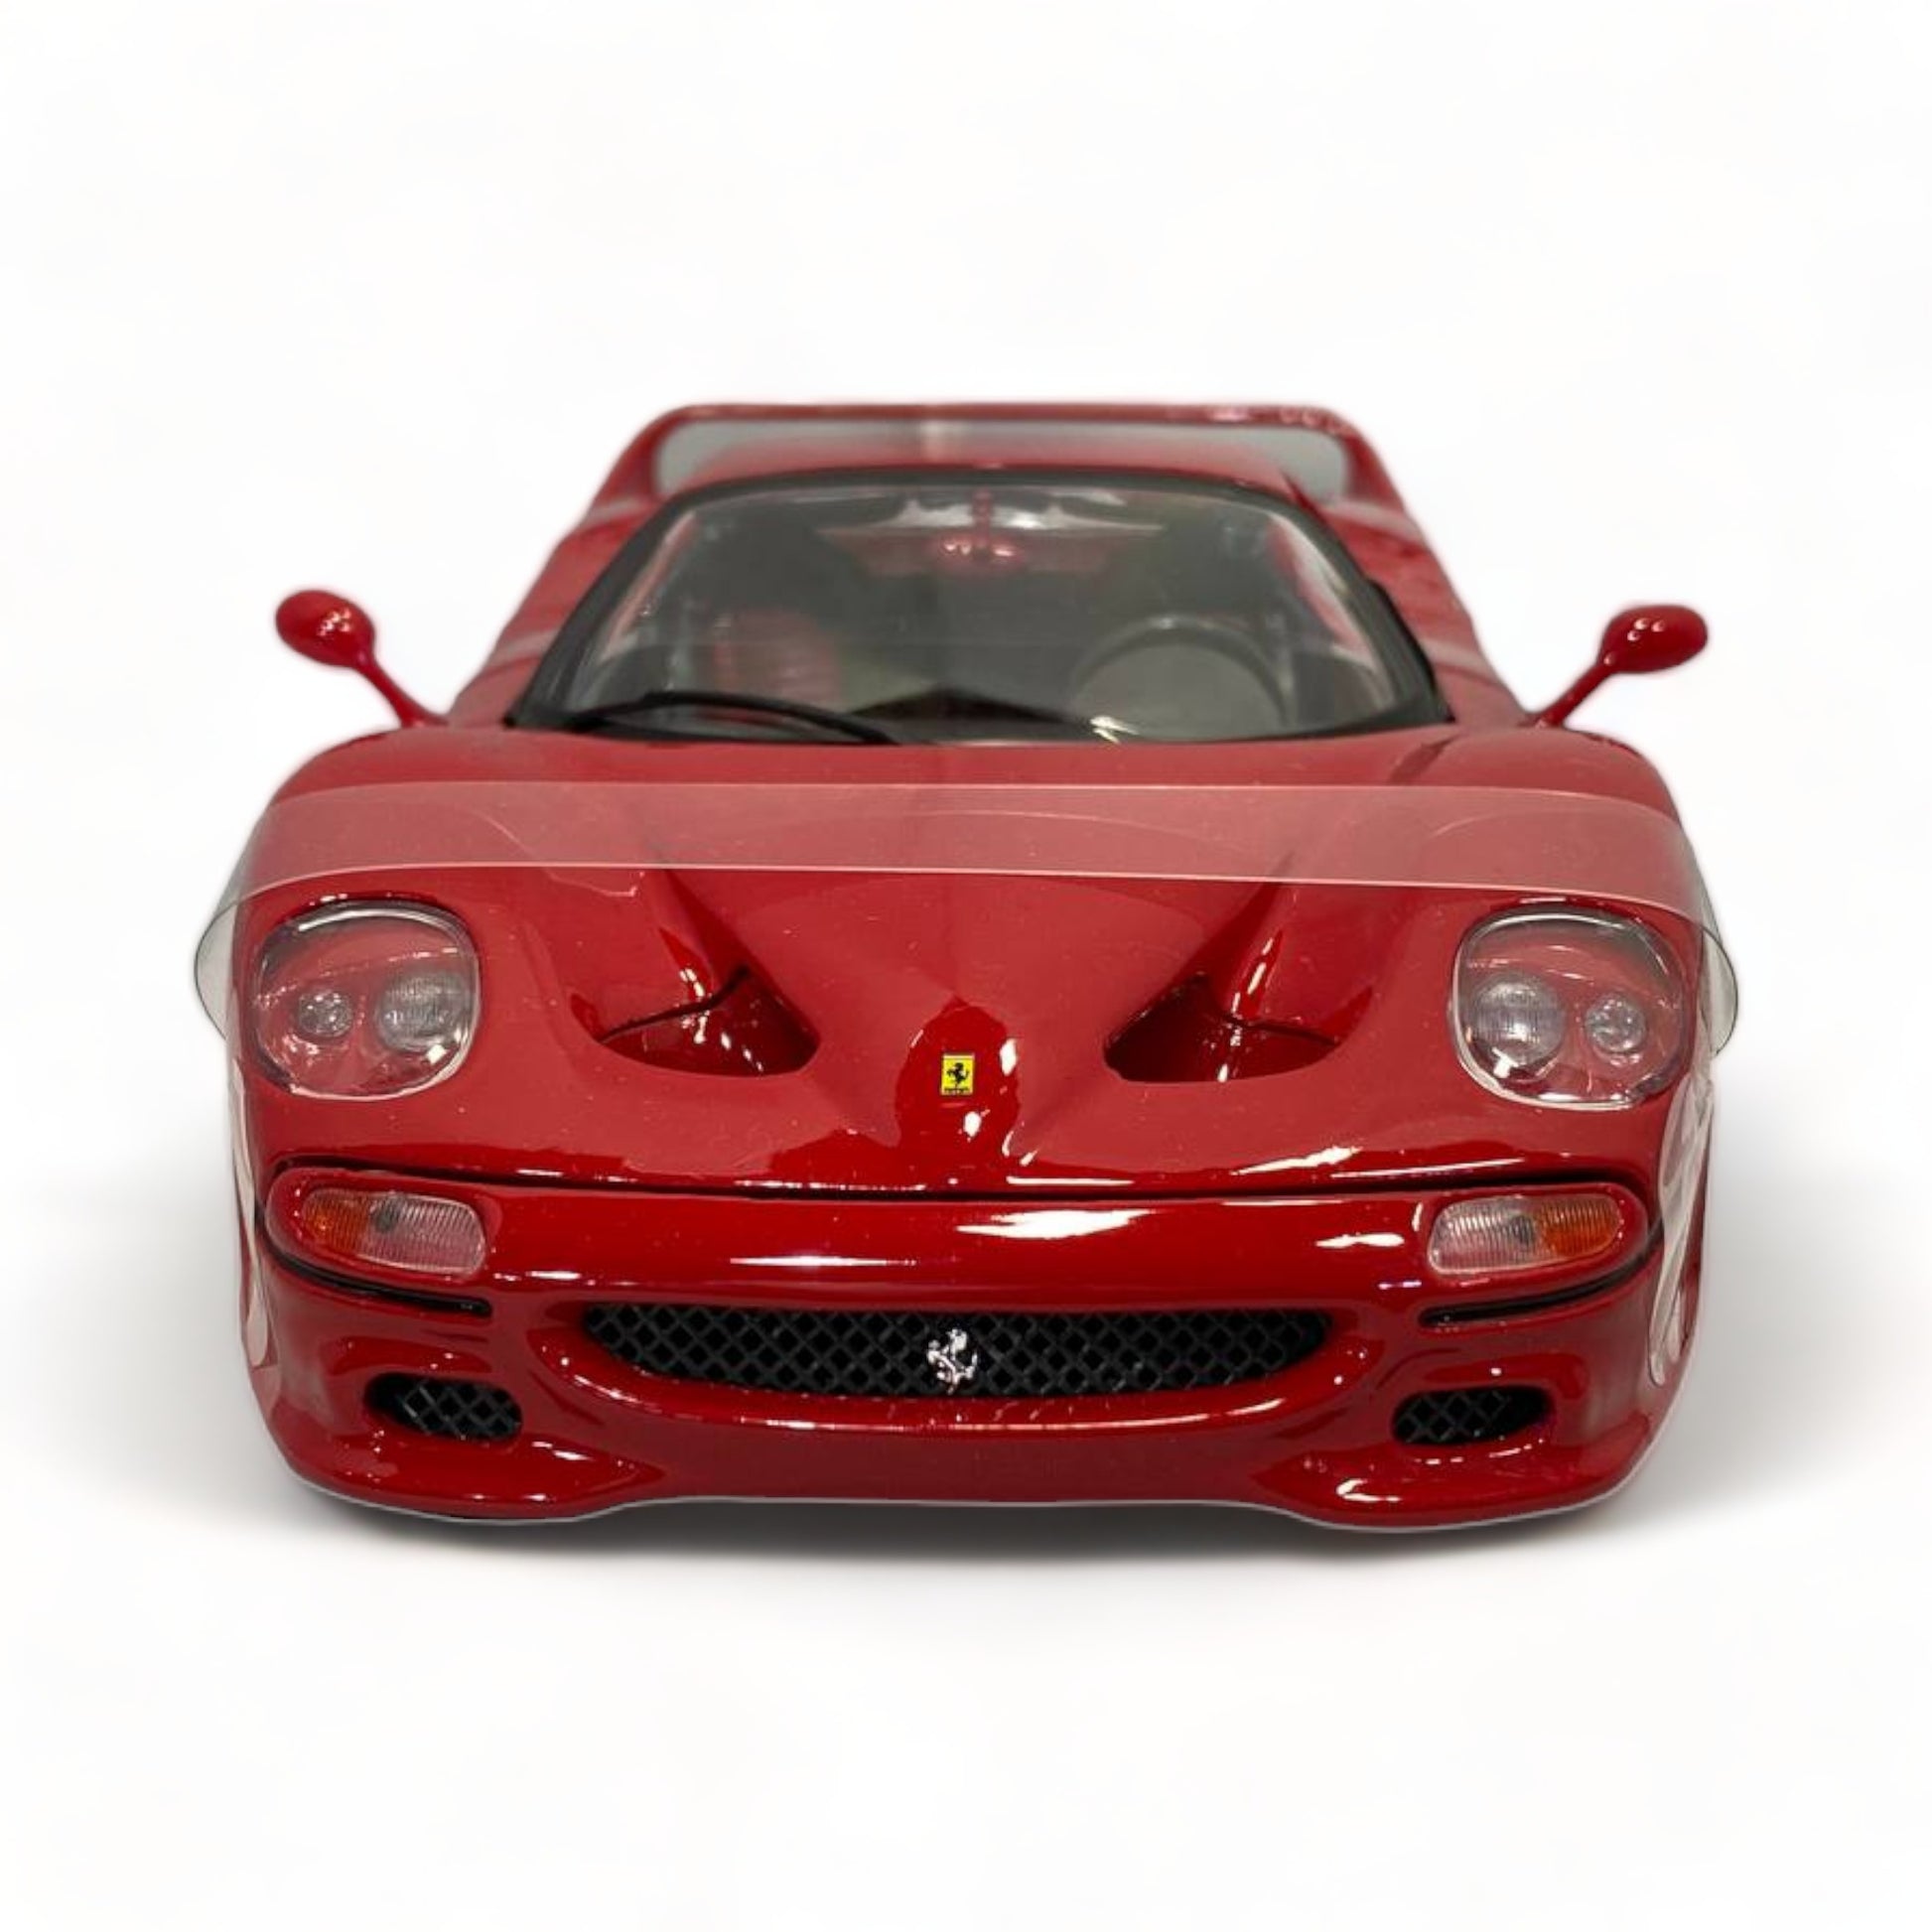 1/18 Diecast car Ferrari F50 Red Bburago Scale Model Car